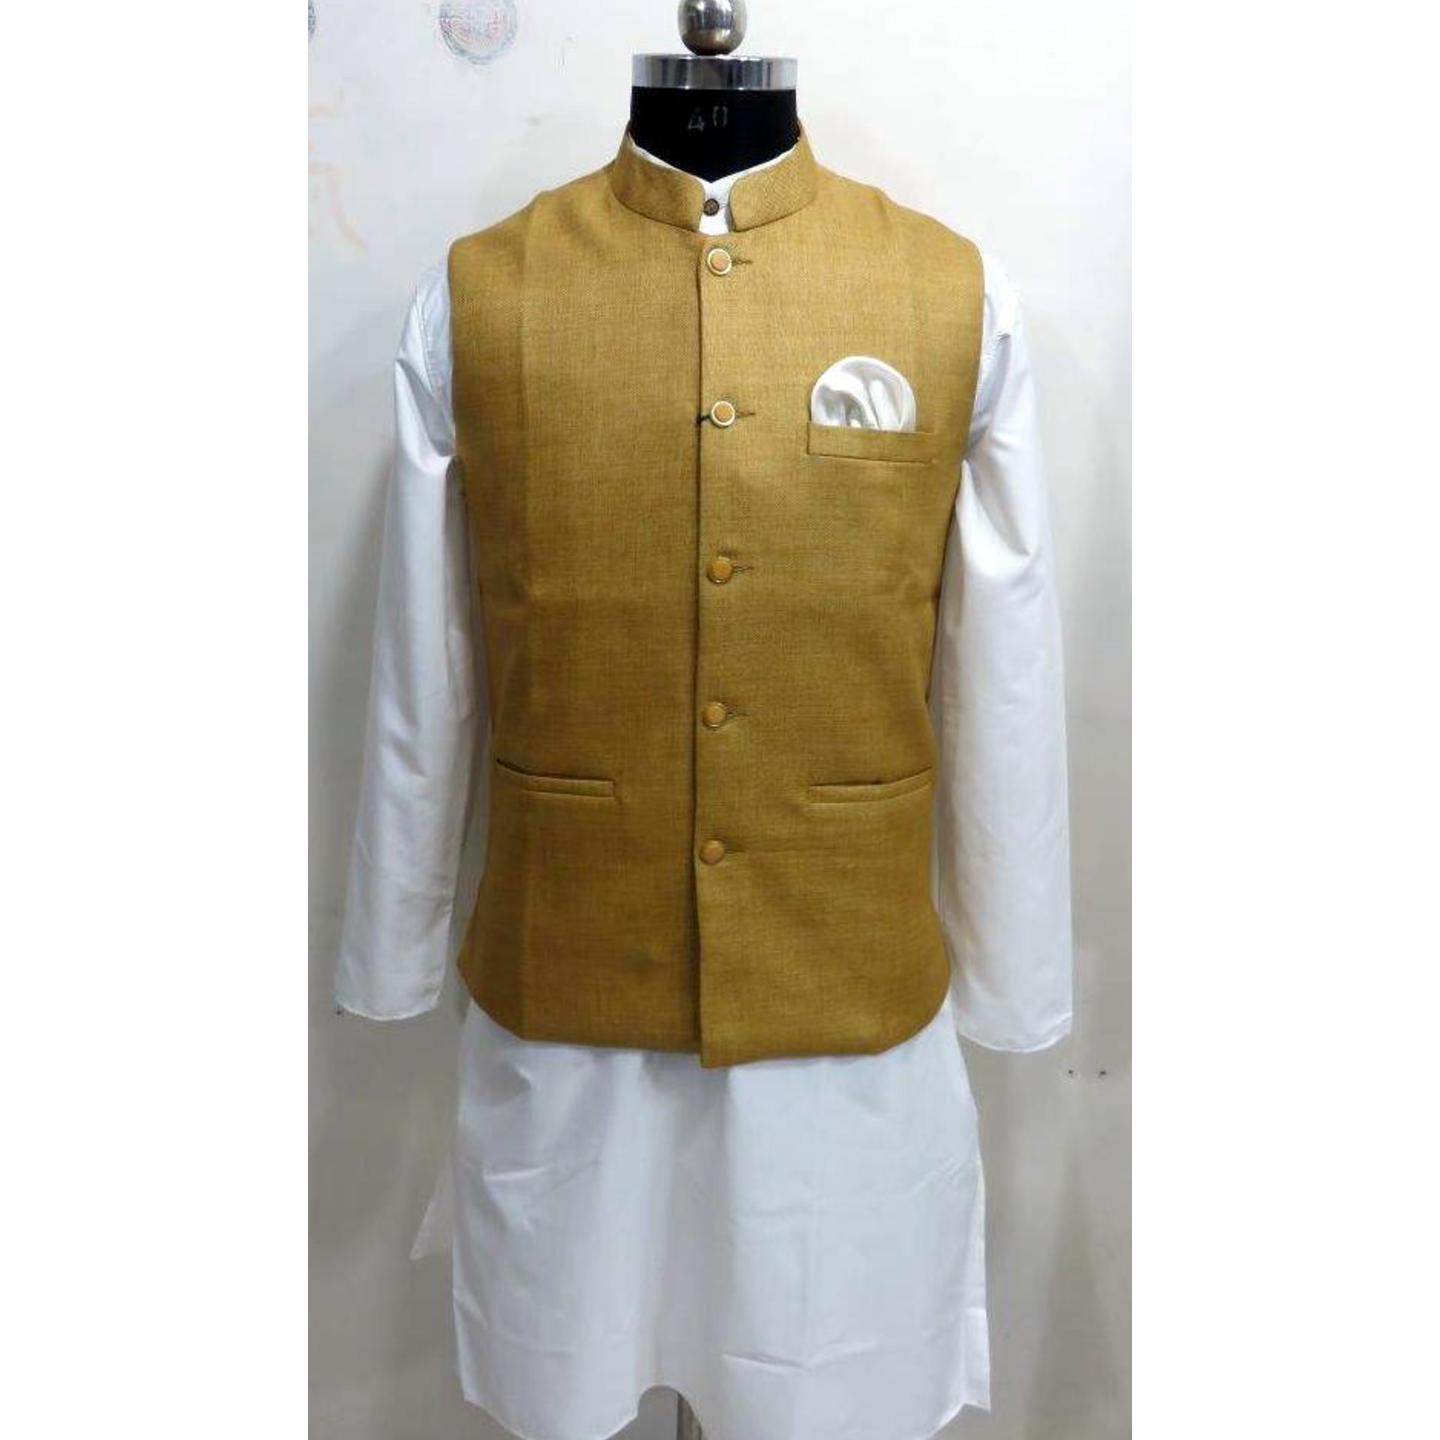 NehruModi Jacket with White Kurta pajama set